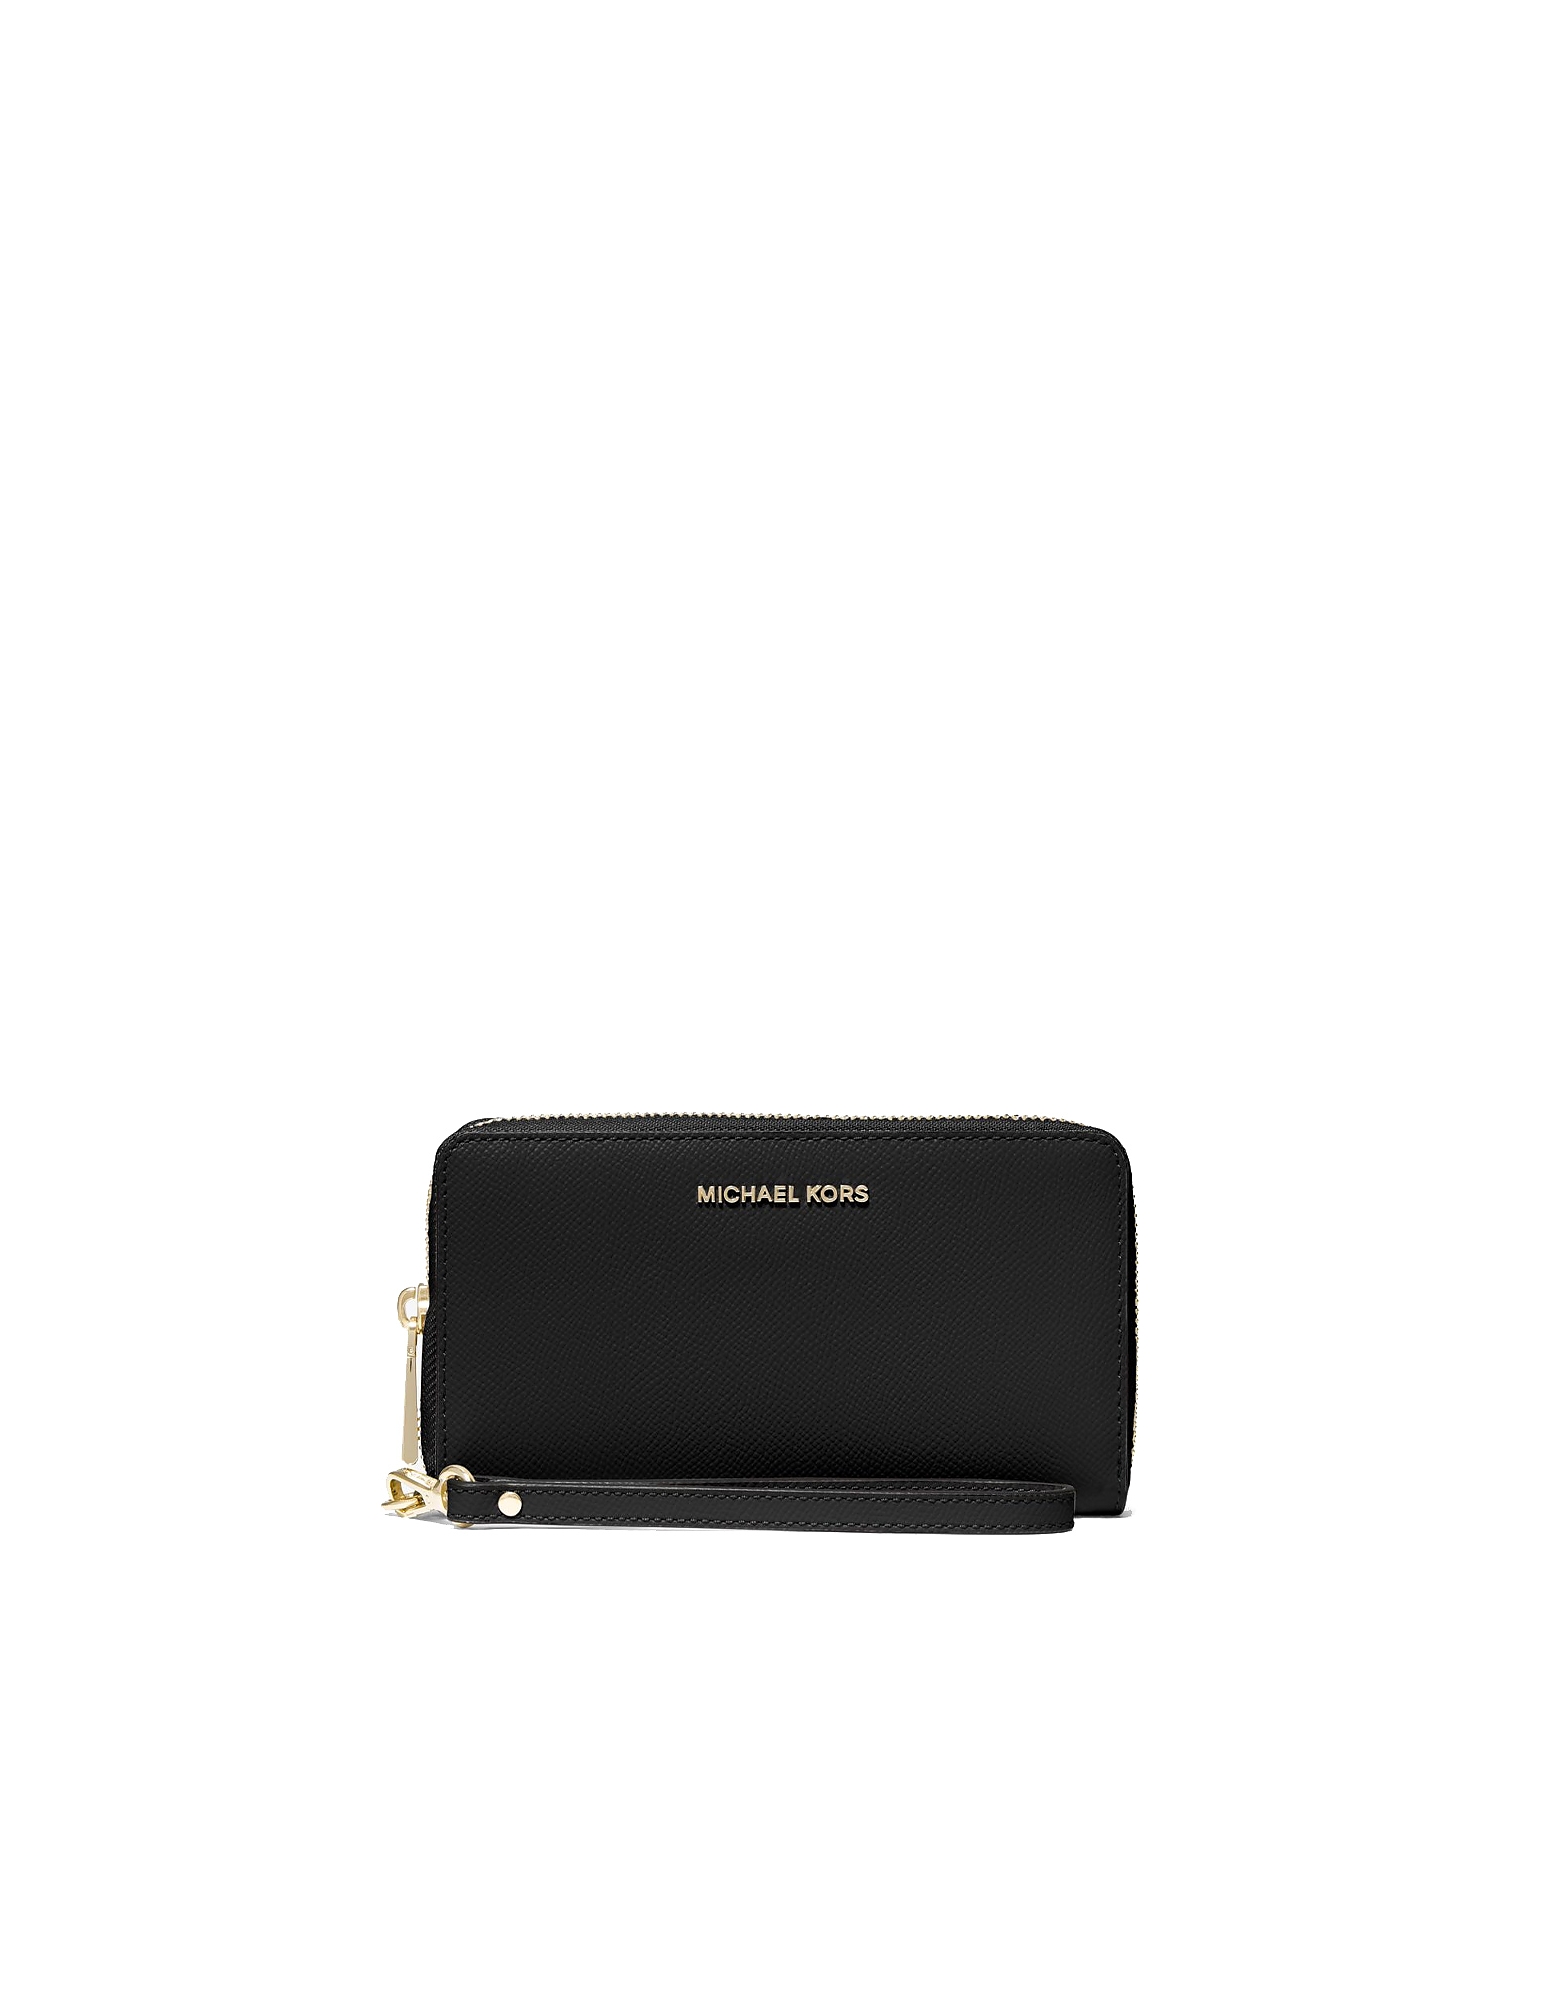 Michael Kors Designer Wallets Women's Wallet In Black